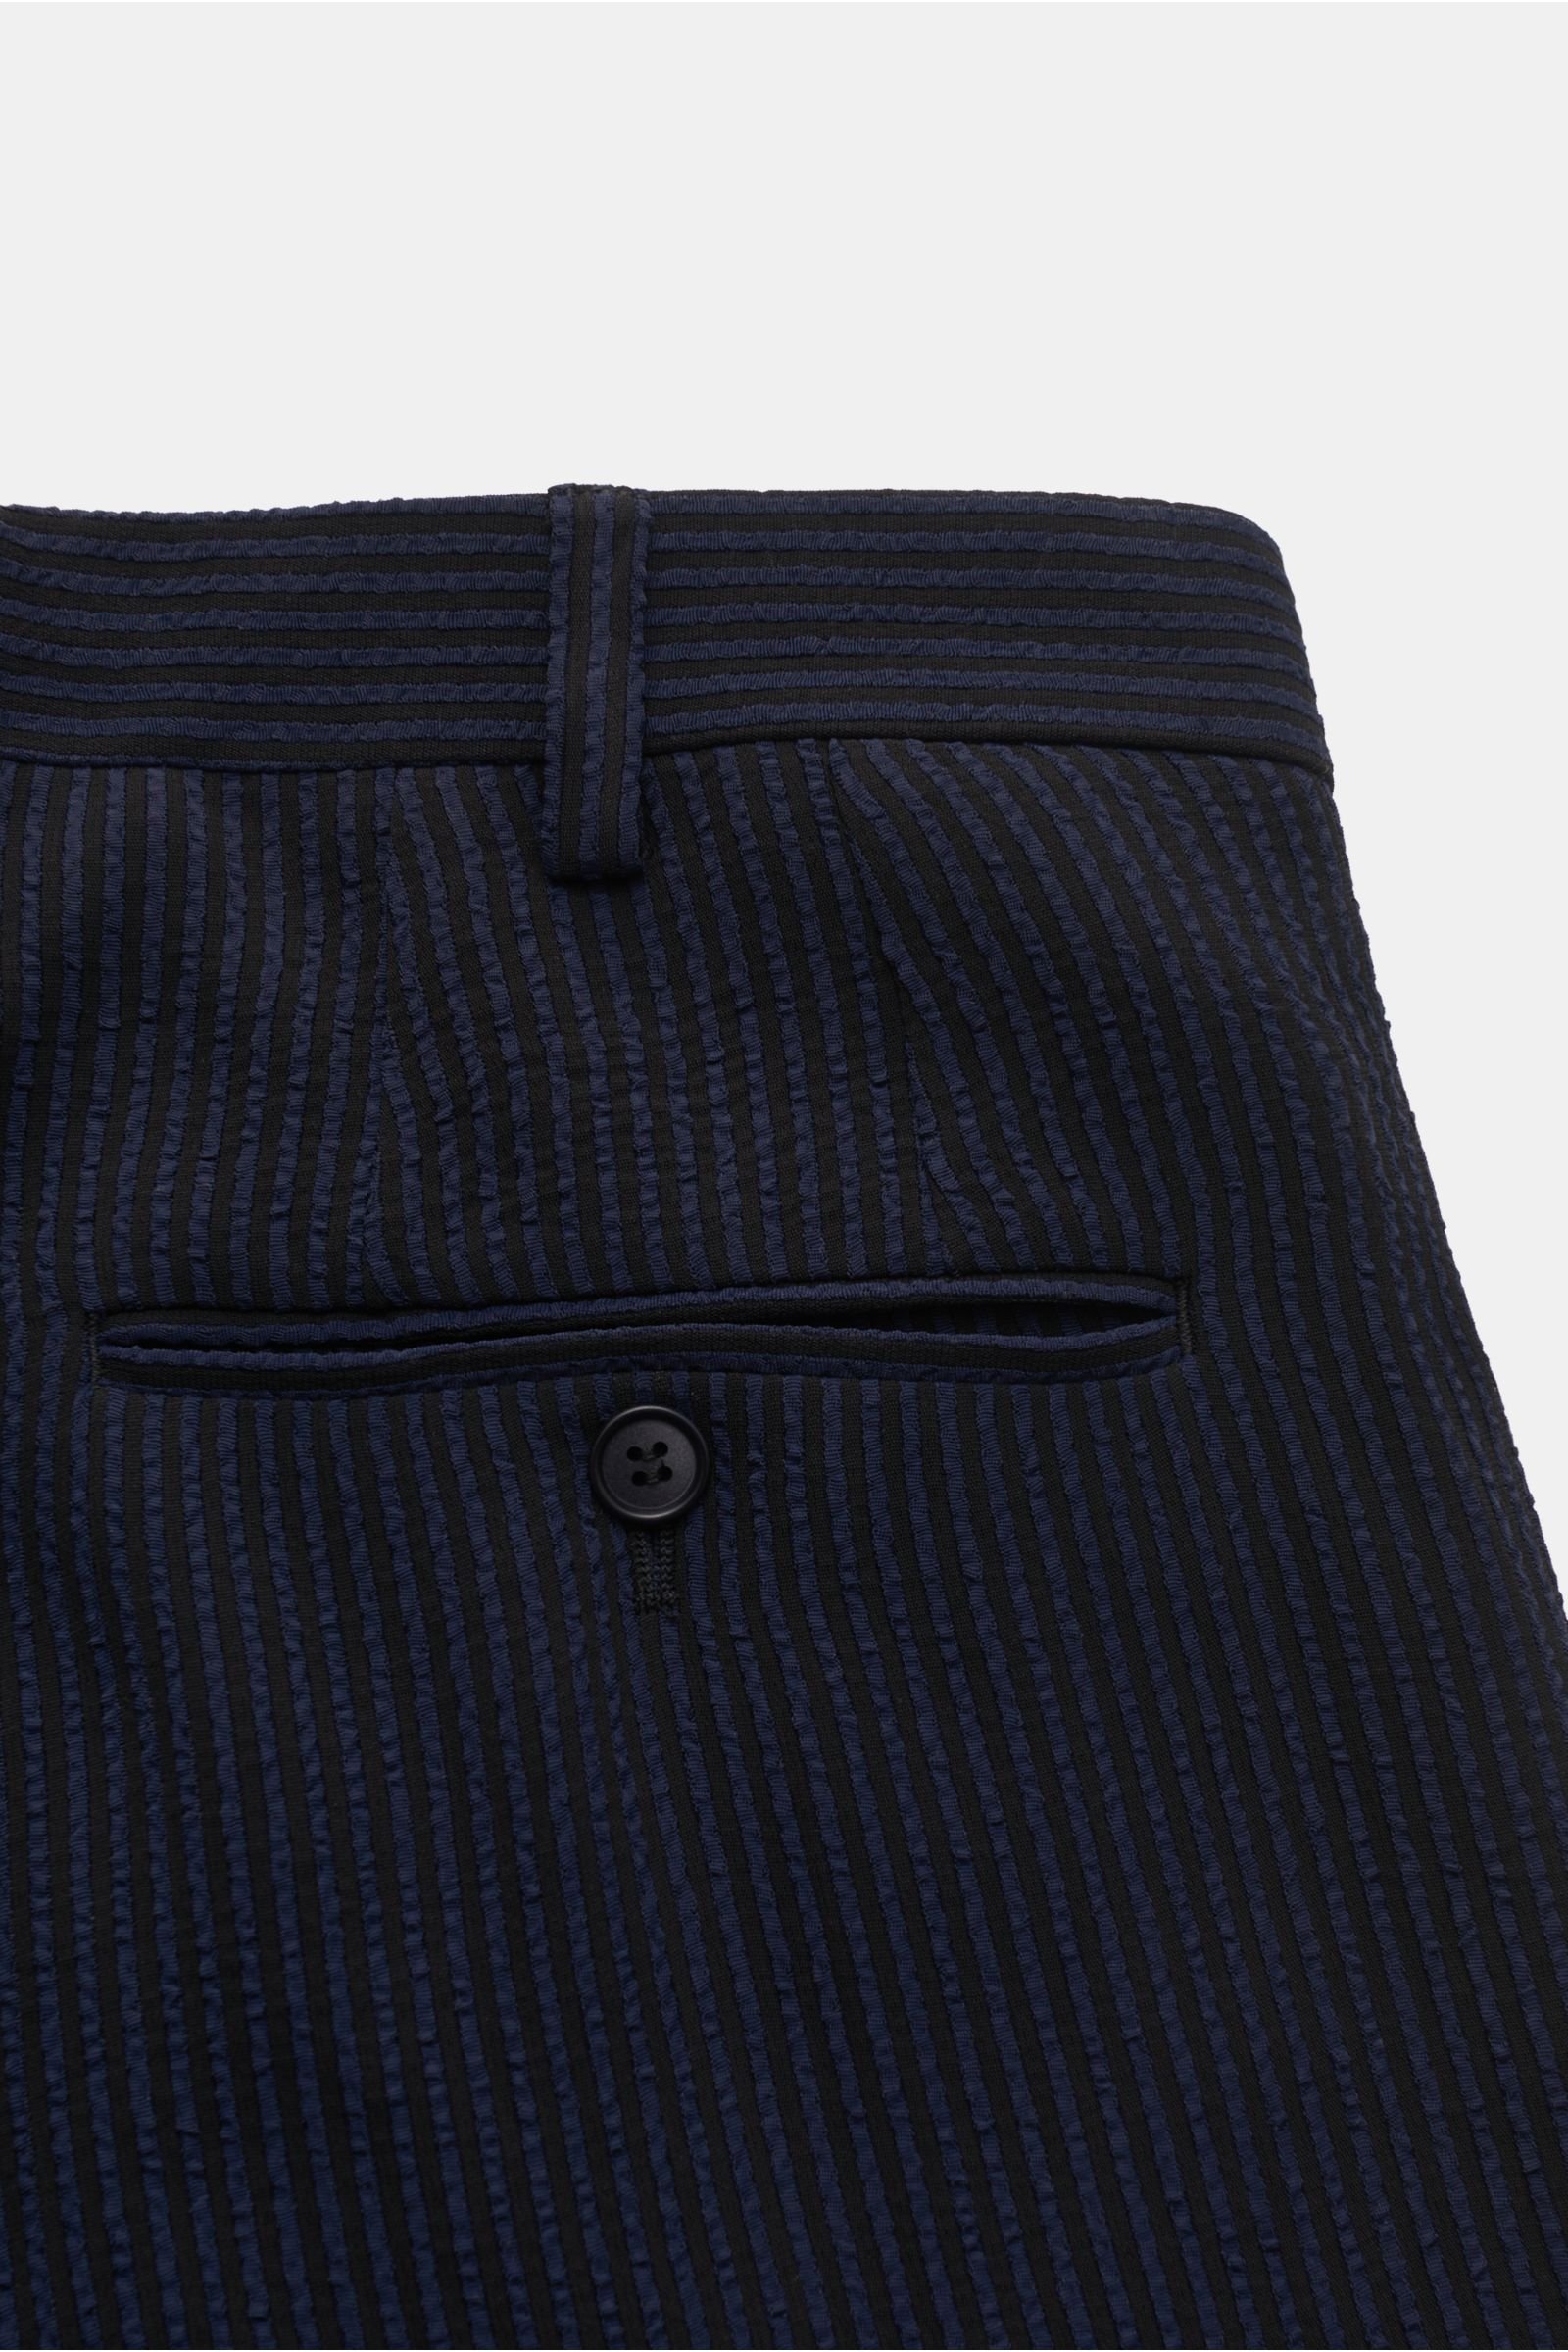 Buy Armani Exchange Black Regular Fit Flat Front Trousers for Men Online   Tata CLiQ Luxury